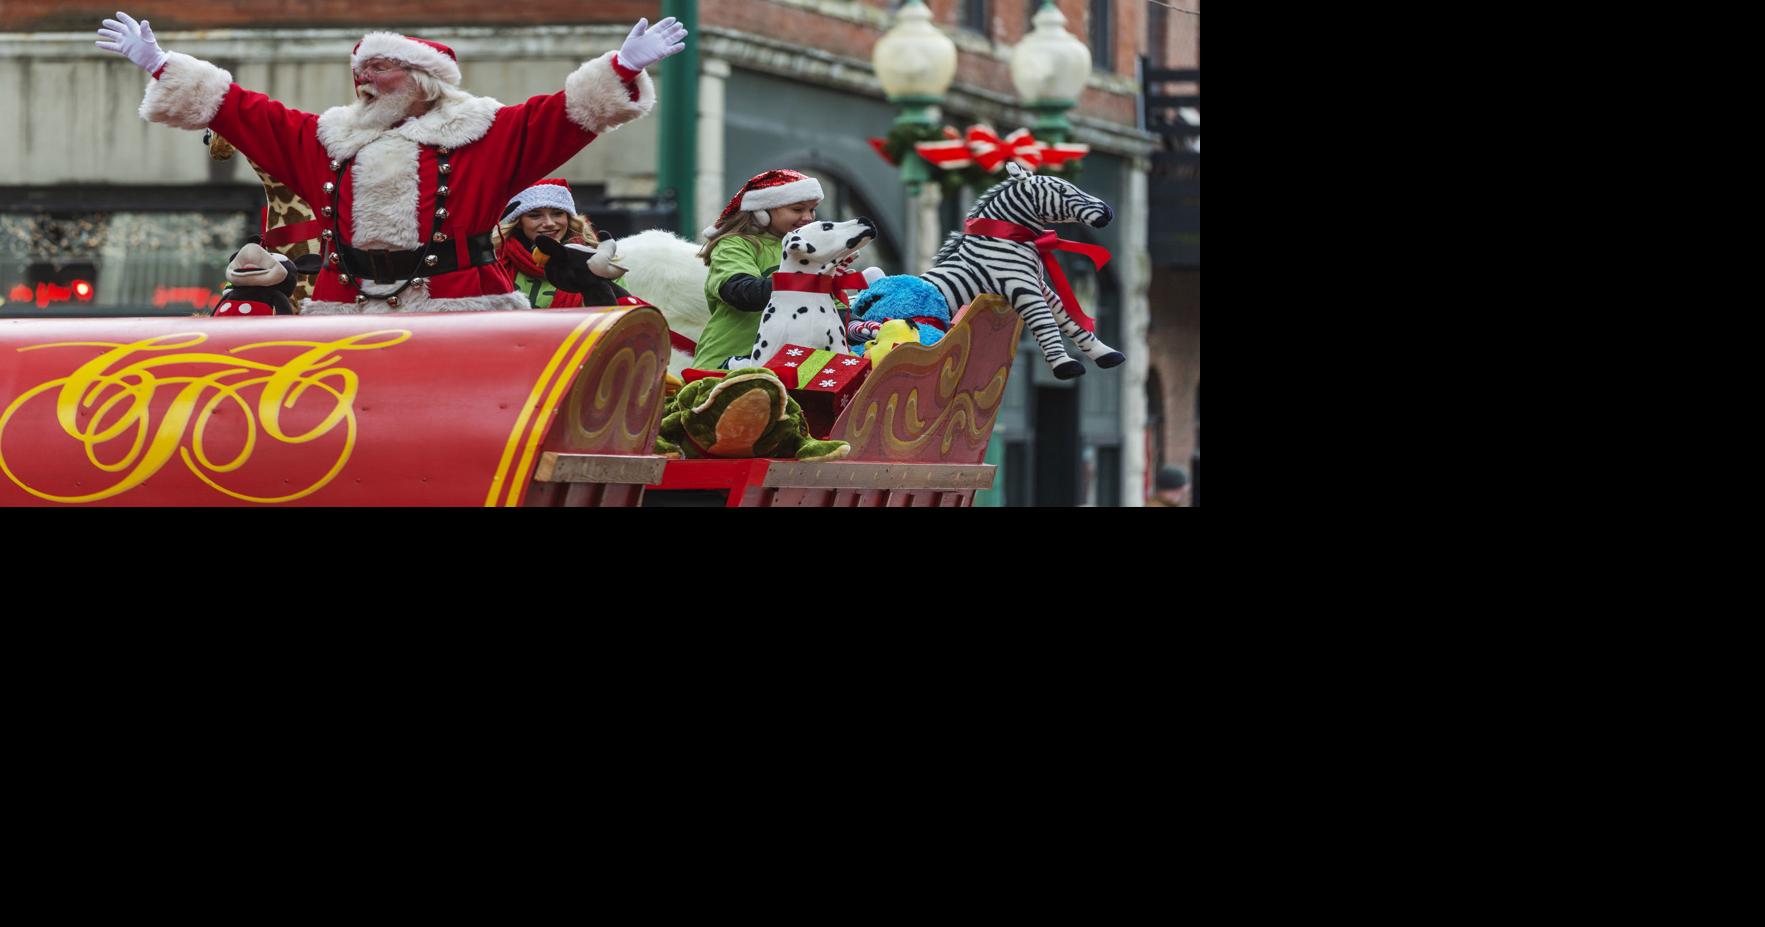 PHOTOS Charleston Christmas parade Kanawha County